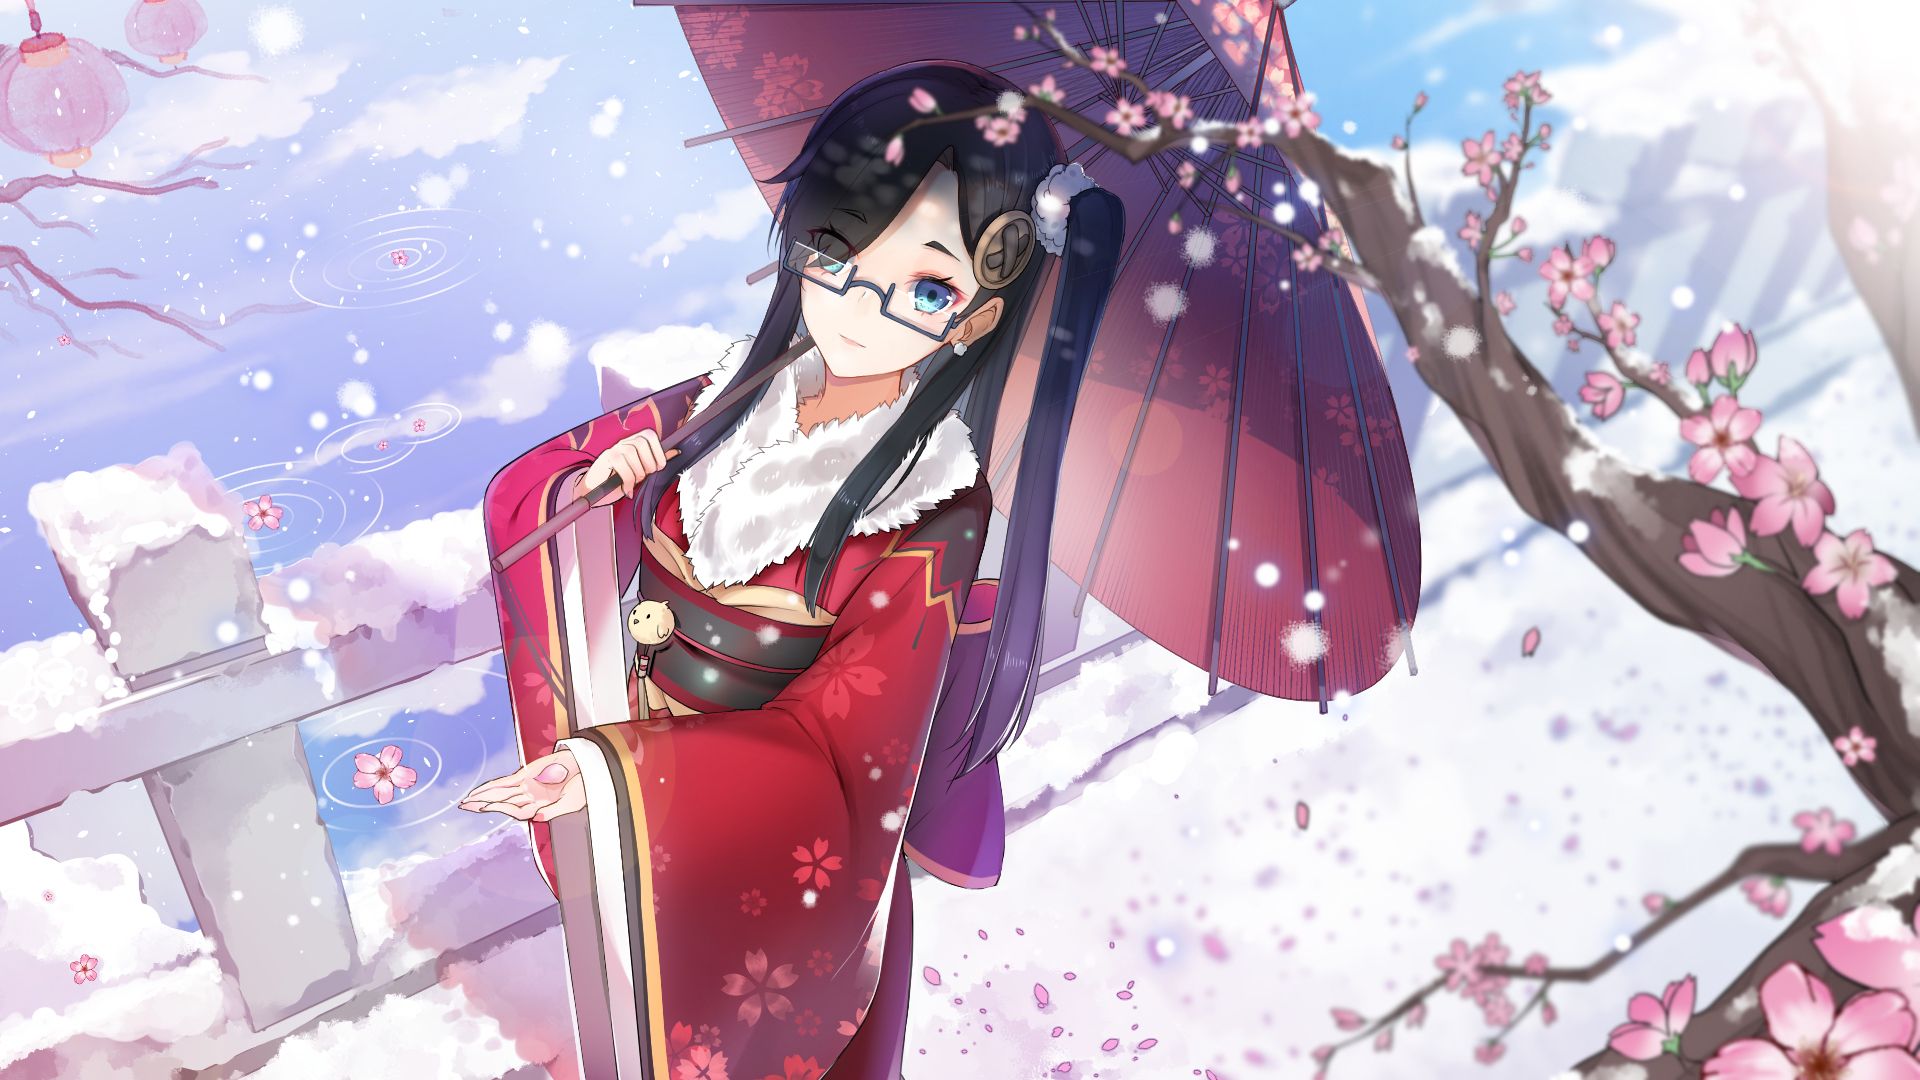 812550 descargar imagen animado, geisha, ojos aguamarina, pelo negro, florecer, lentes, kimono, pelo largo, oriental, nieve, paraguas, invierno: fondos de pantalla y protectores de pantalla gratis